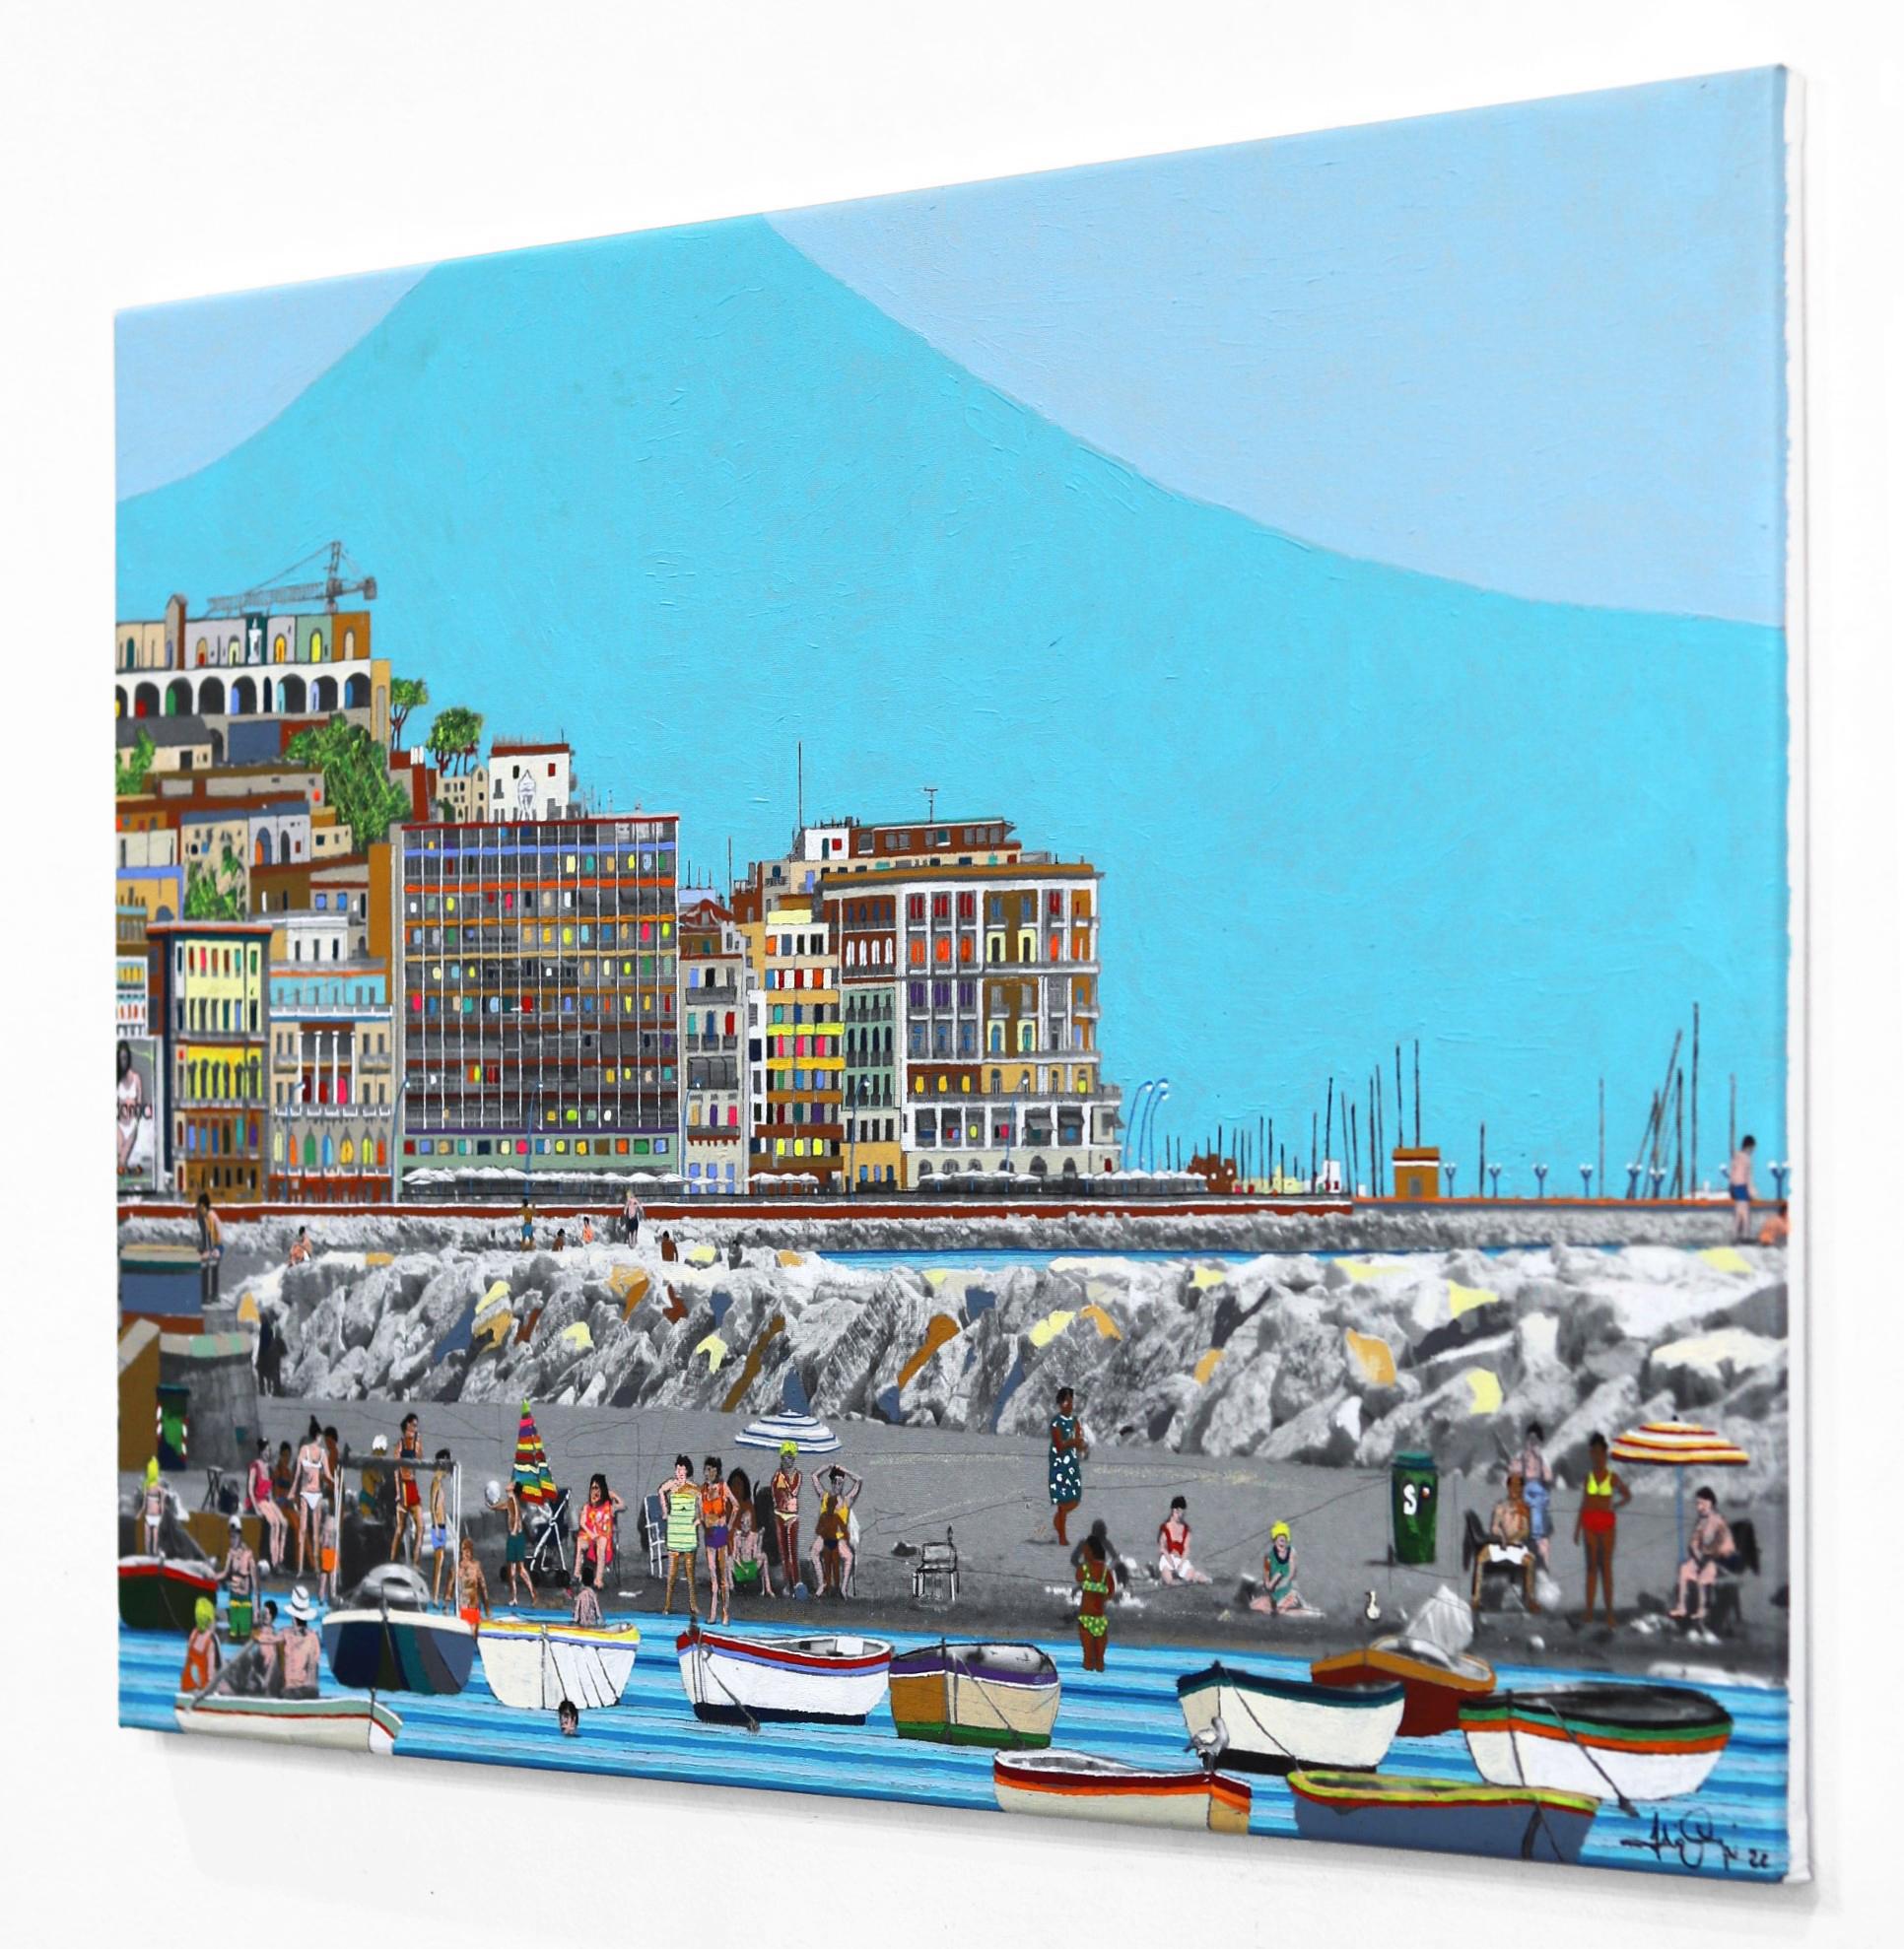 Napoli - Original Landscape Colorful Authentic Italian Beach City Painting - Pop Art Mixed Media Art by Fabio Coruzzi